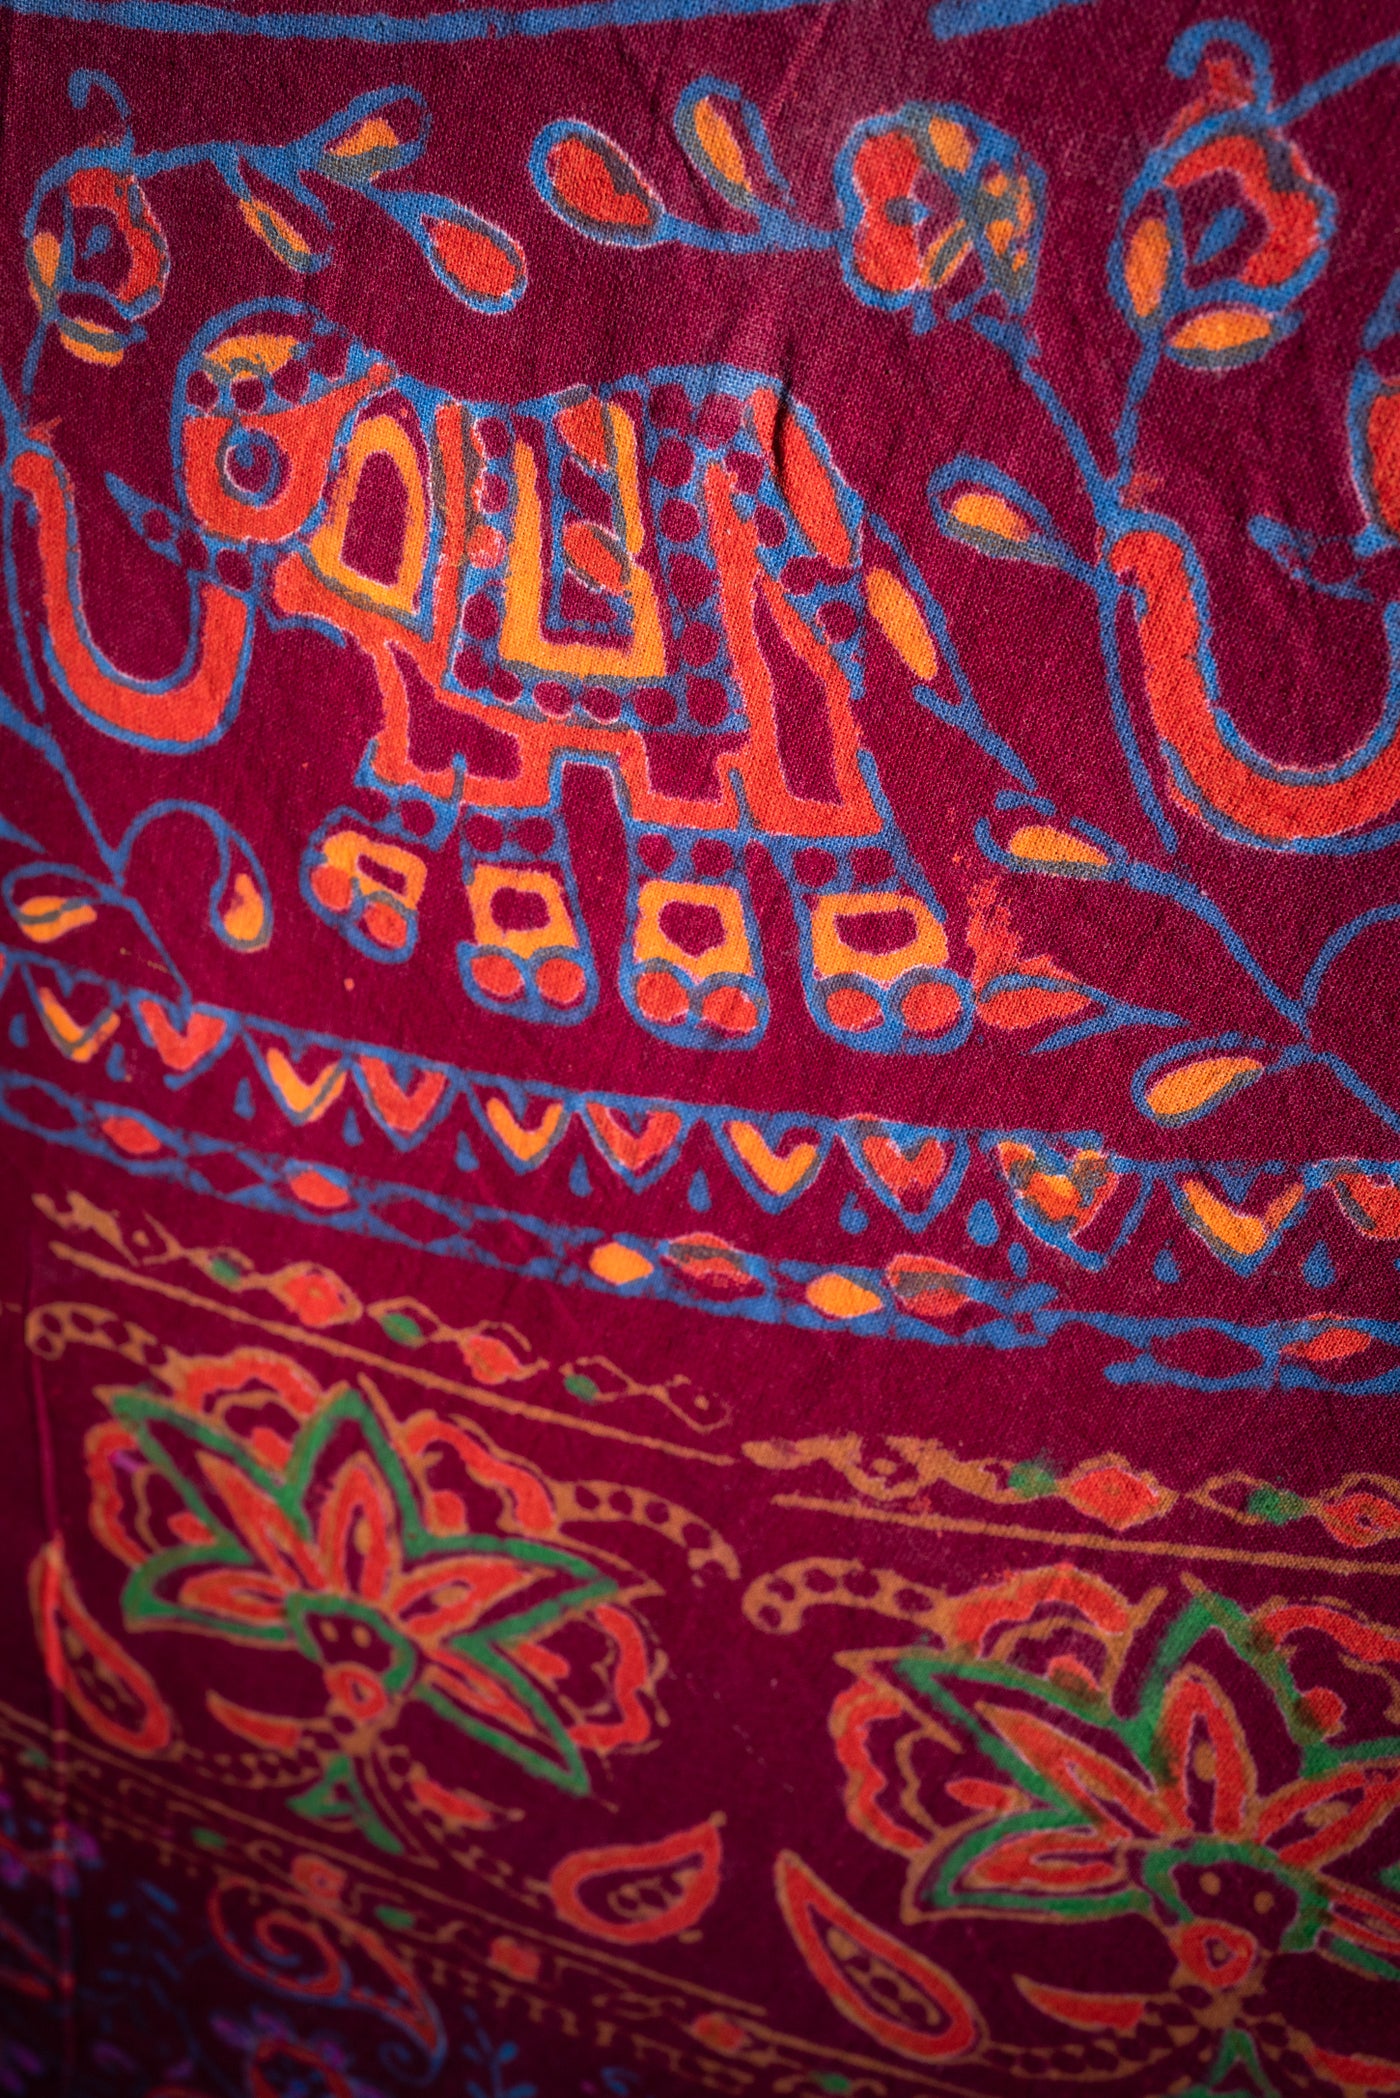 Traditional Elephant Mandala Block Print Queen Tapestry